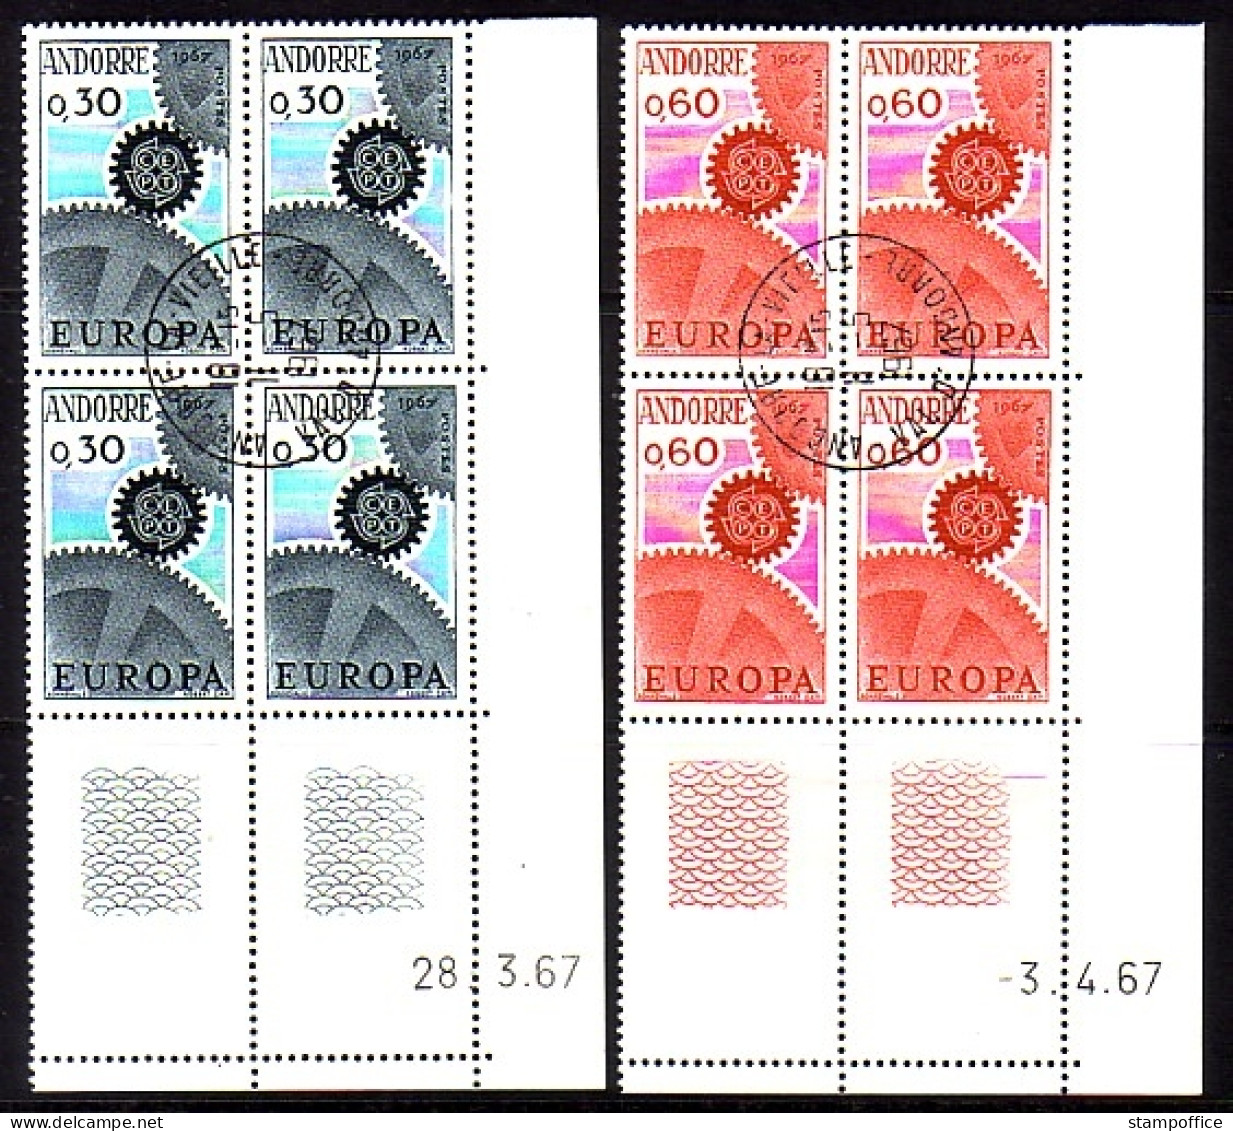 ANDORRA FRANZÖSISCH MI-NR. 199-200 GESTEMPELT(USED) 4er BLOCK EUROPA CEPT 1967 - 1967